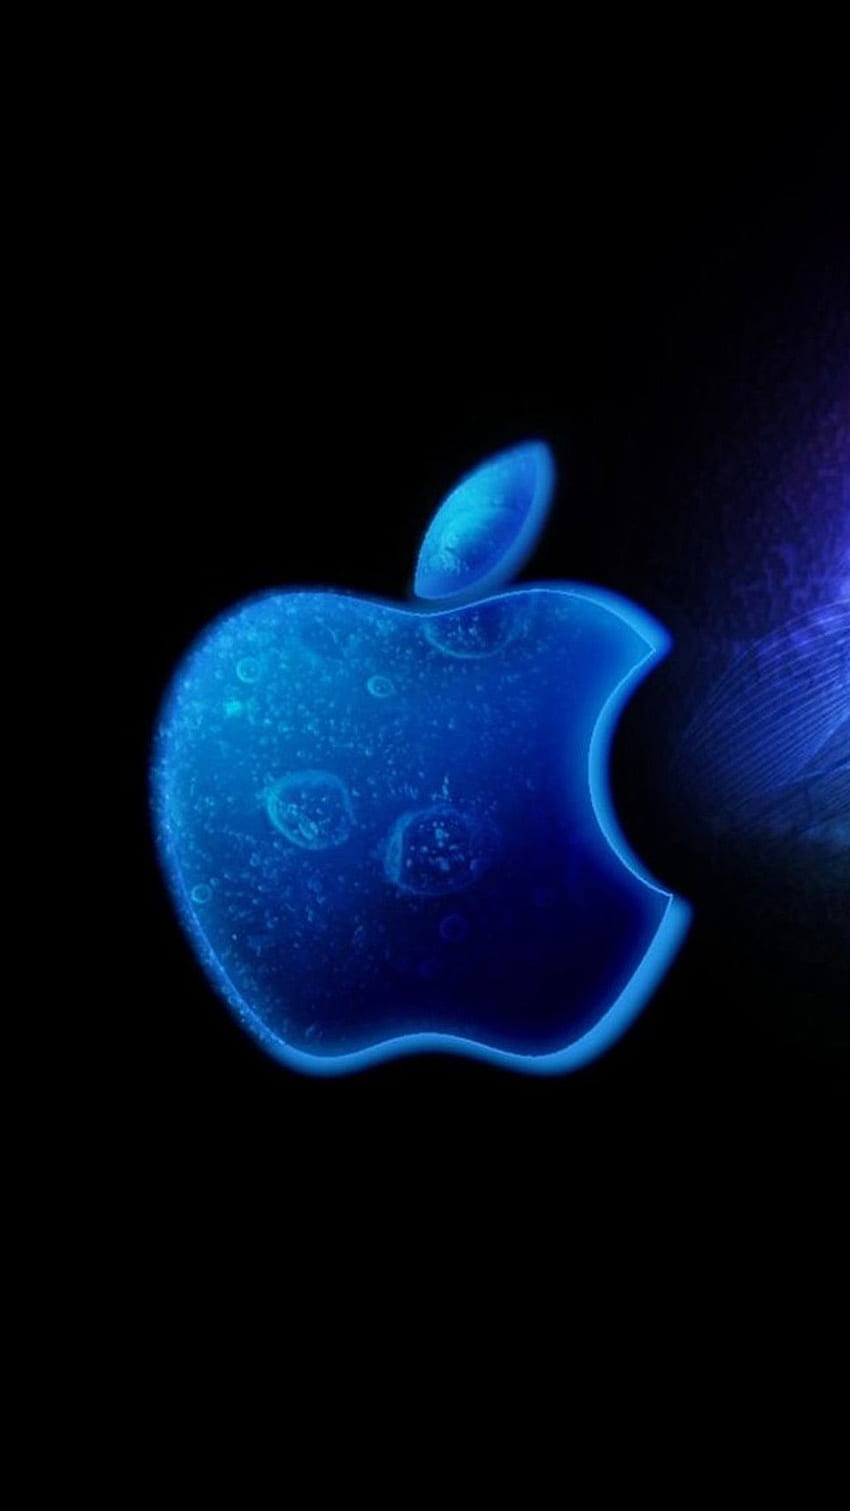 Apple LOGO Galaxy S6 76. Apple logo iphone, Apple iphone, Apple logo HD ...